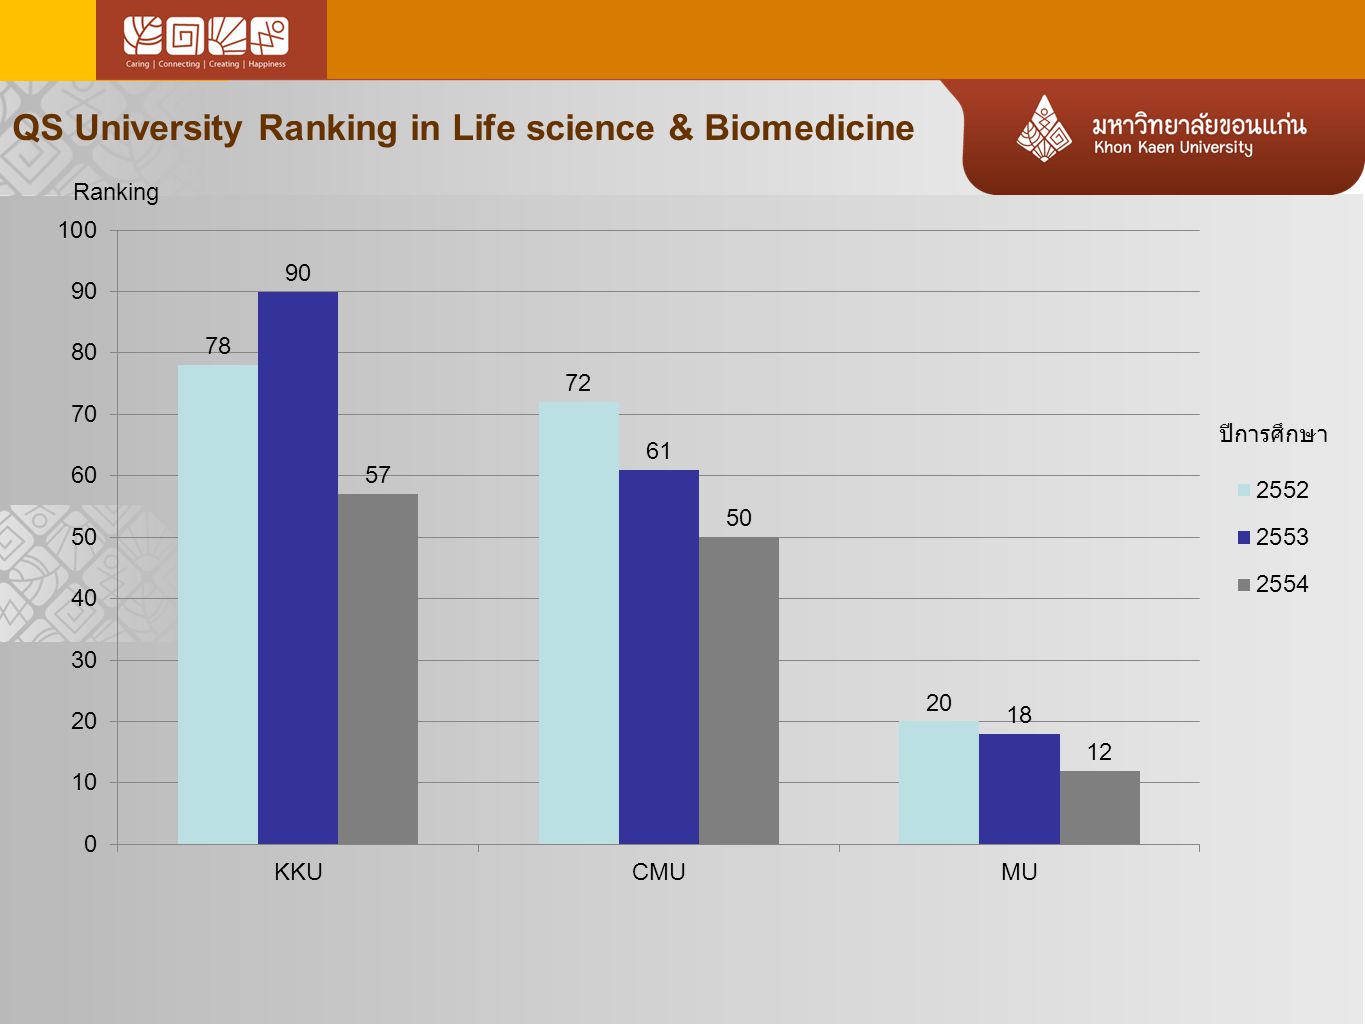 QS University Ranking in Life science & Biomedicine